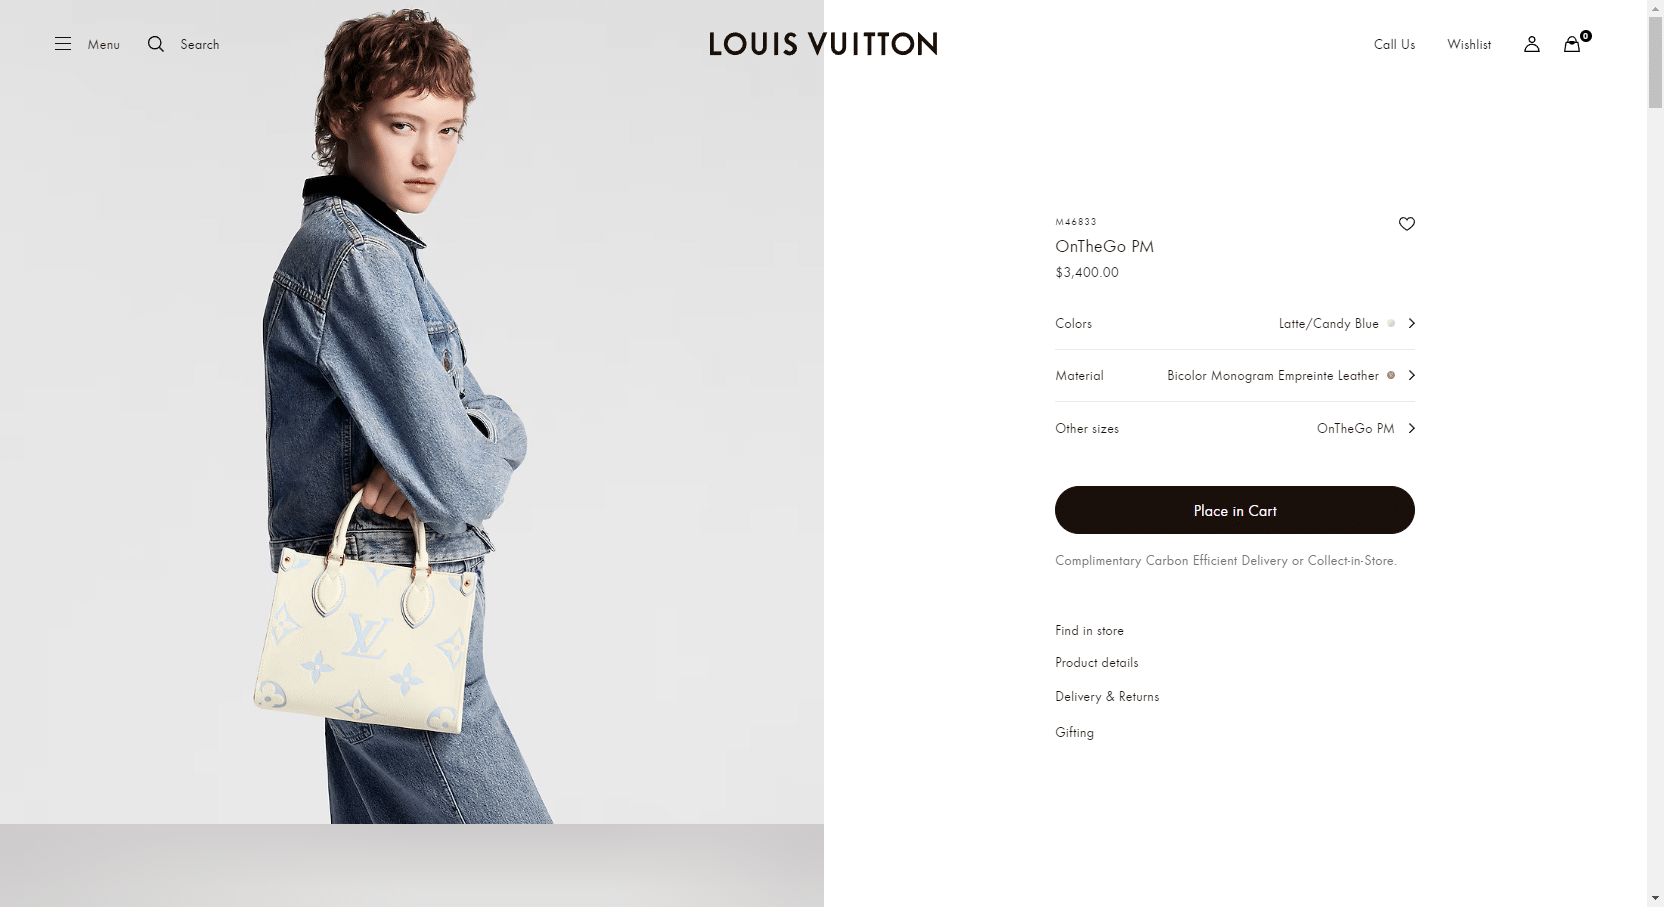 OnTheGo-PM-Bicolor-Monogram-Empreinte-Leather-Women-Handbags-LOUIS-VUITTON-.png